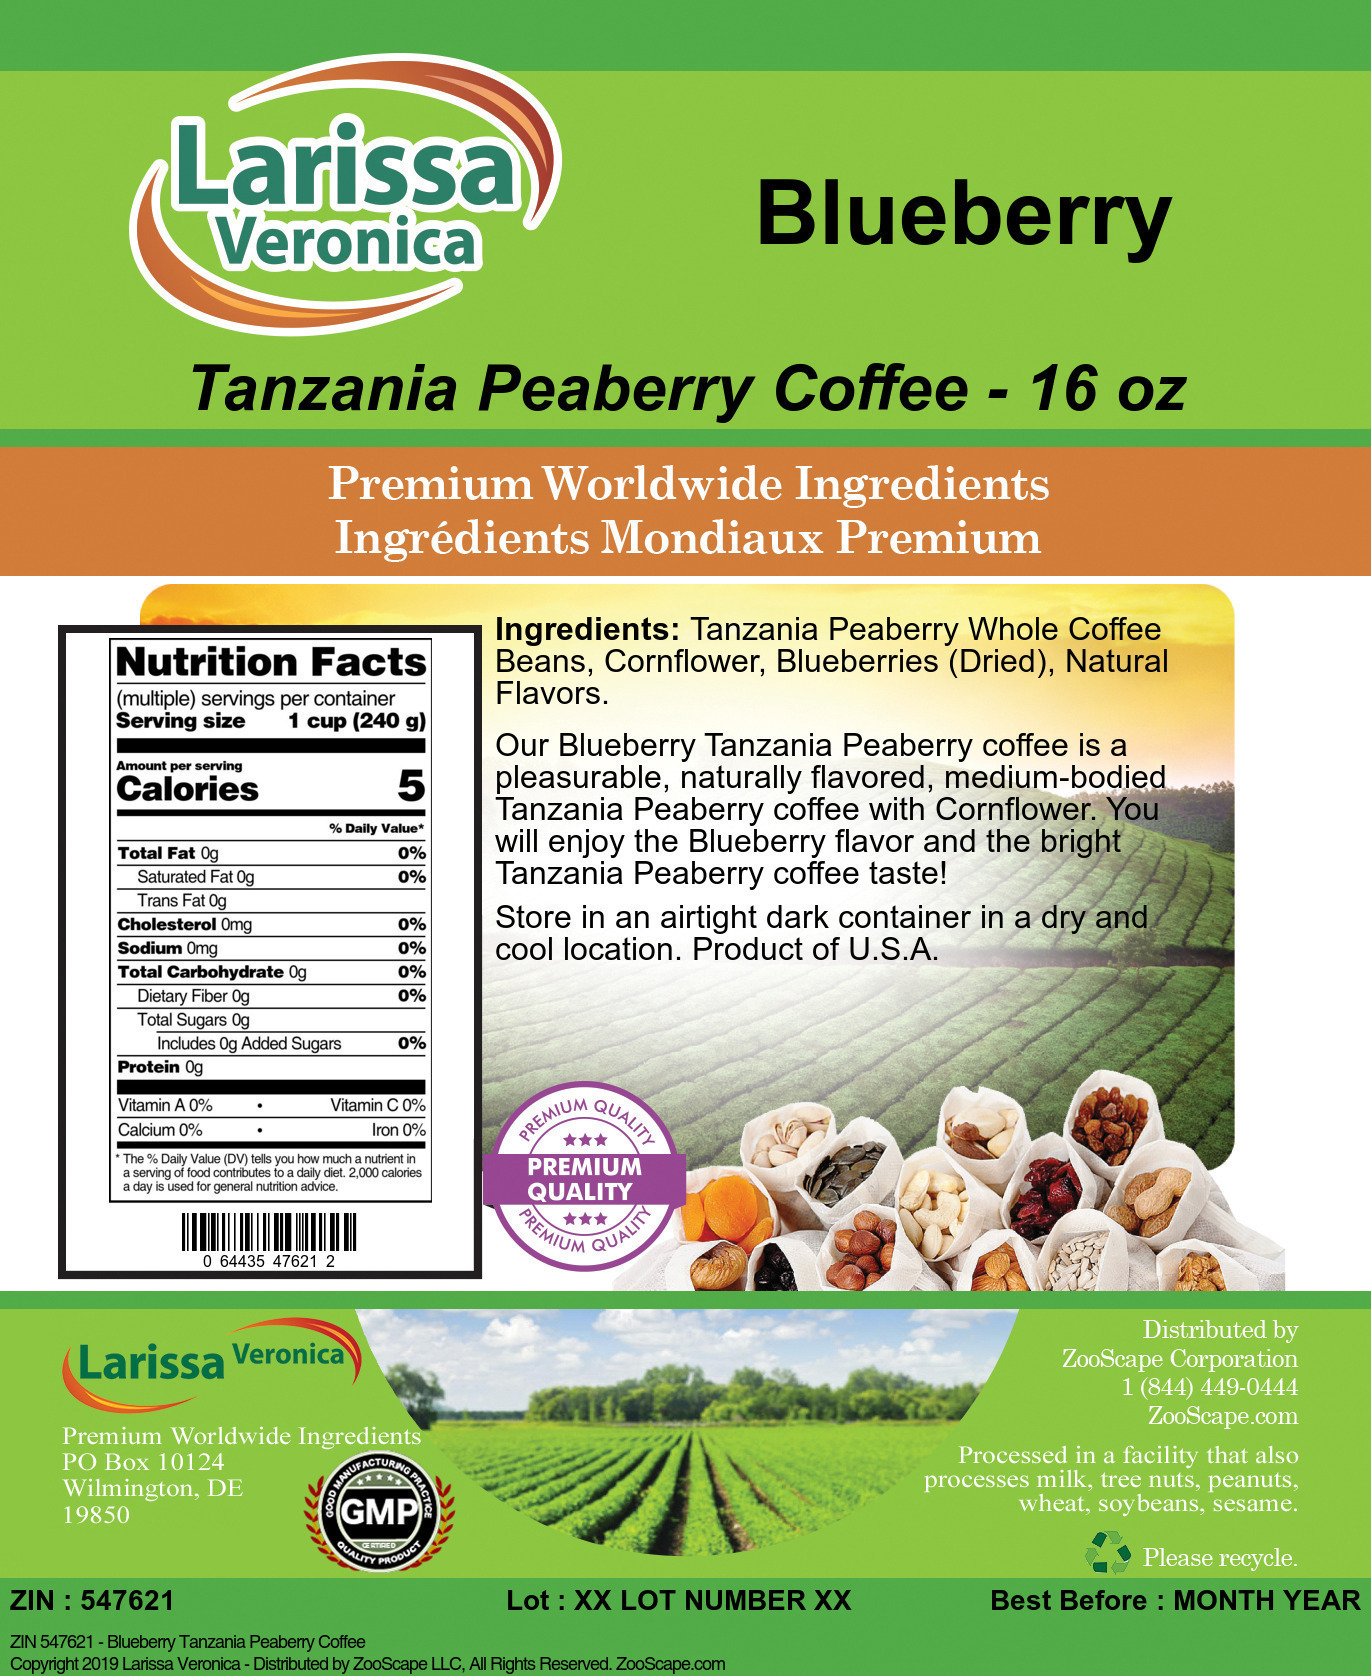 Blueberry Tanzania Peaberry Coffee - Label